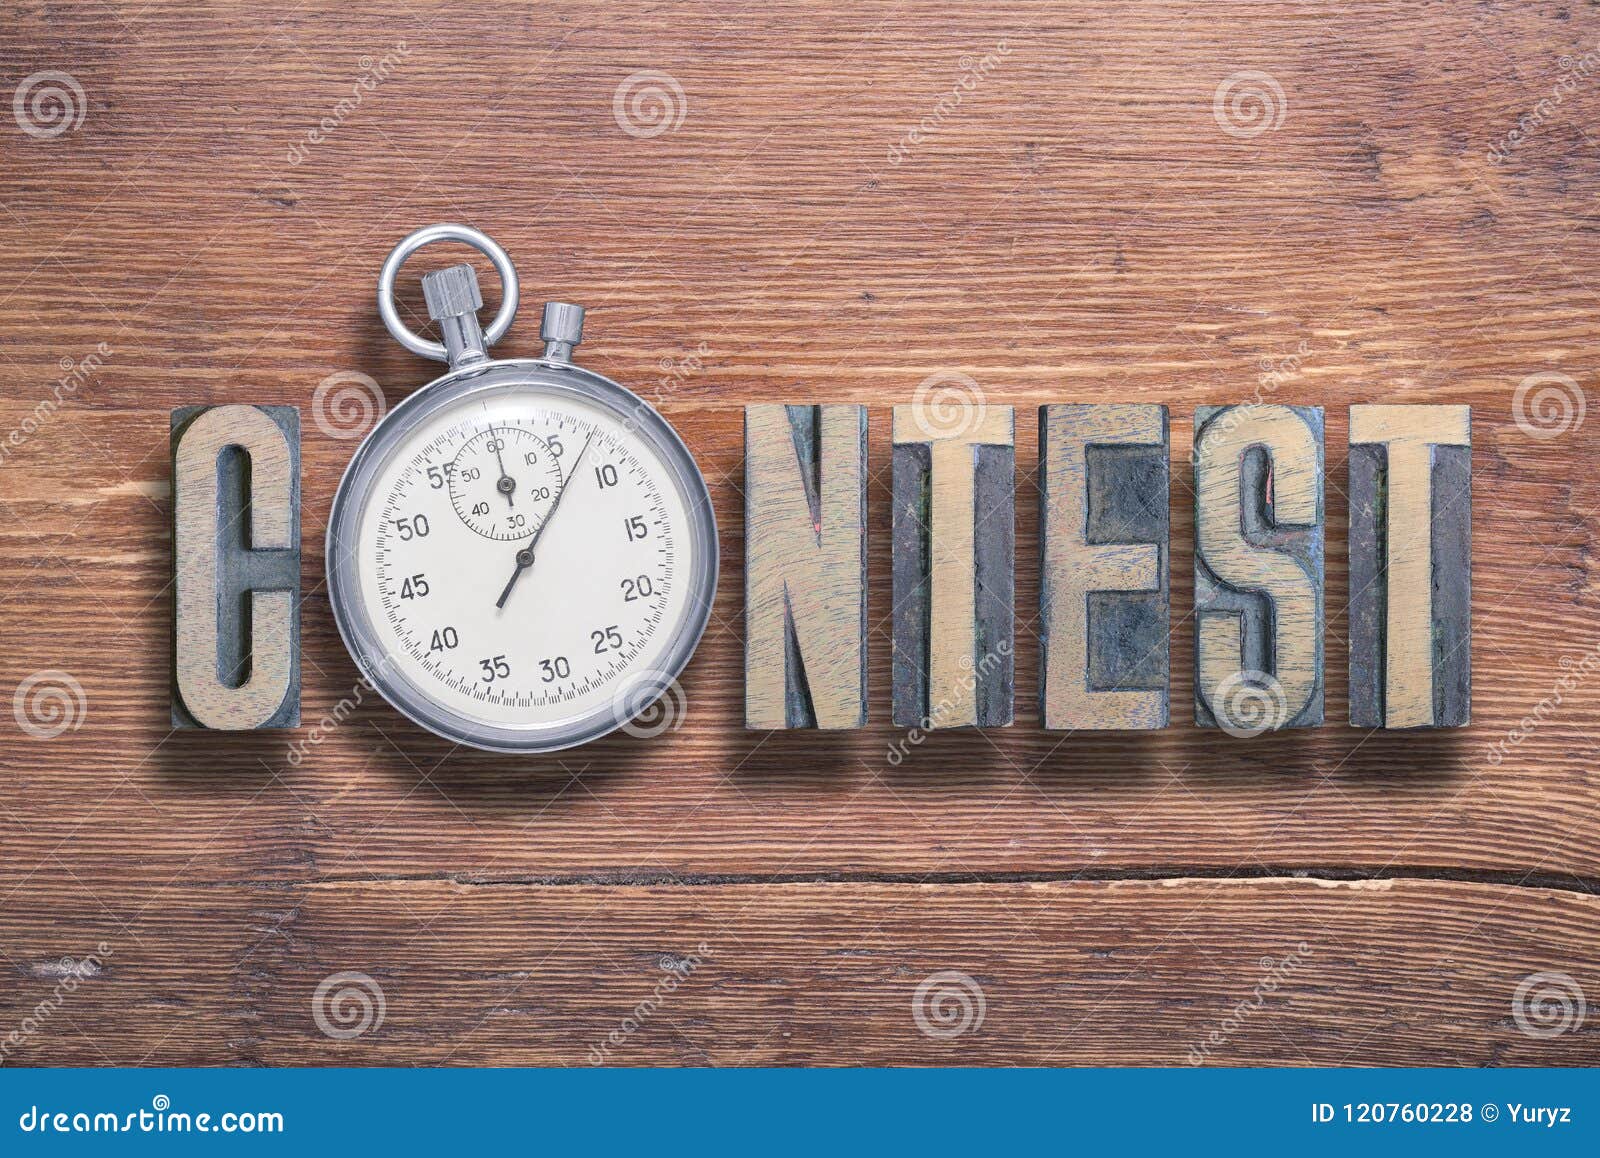 contest watch wooden